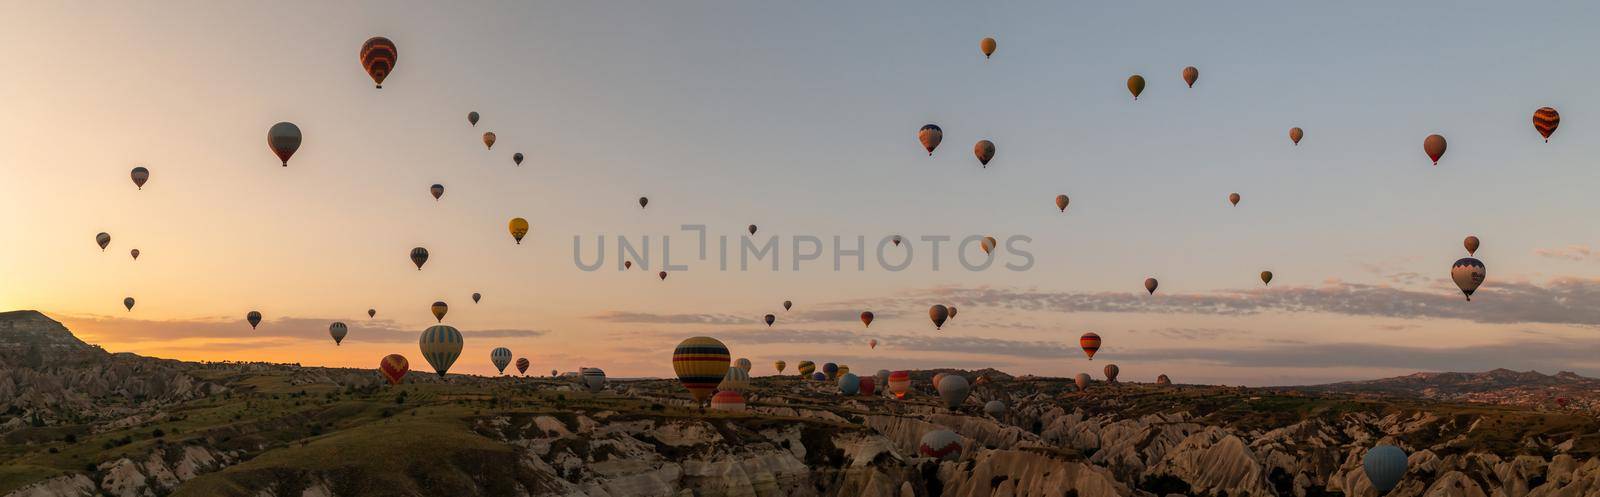 Turkey balloons Cappadocia Goreme Kapadokya , Sunrise in the mountains of Capadocia by fokkebok